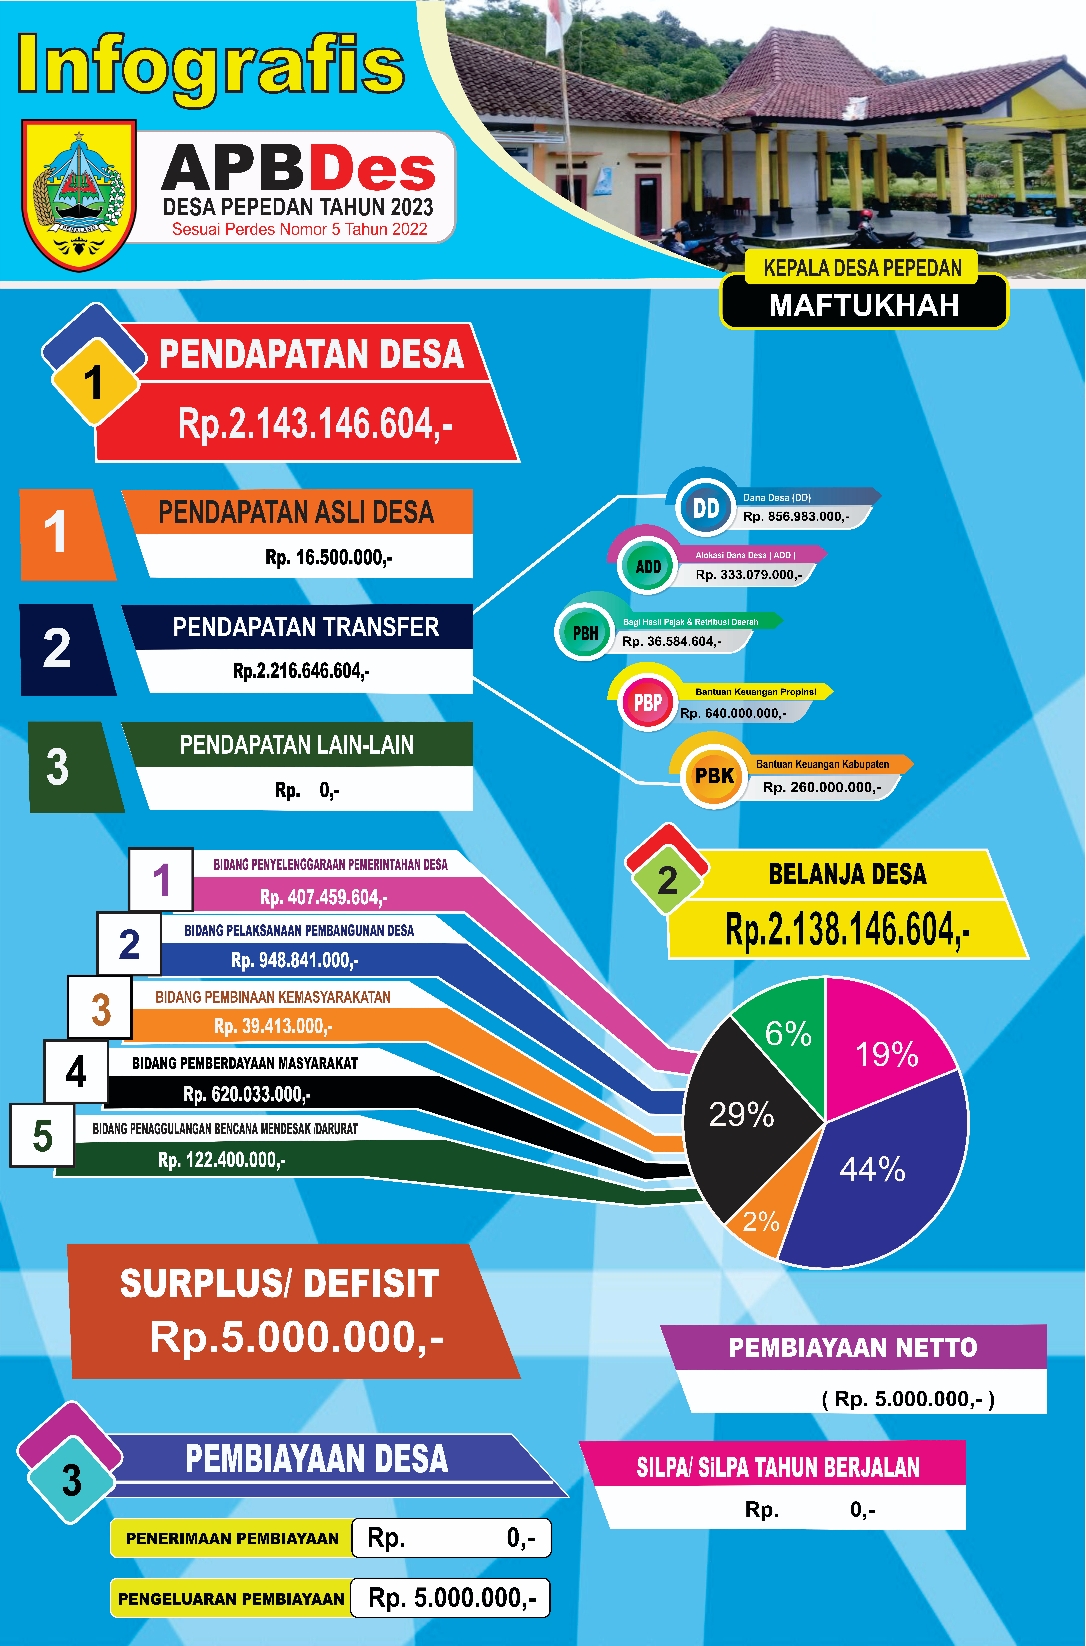 Infografis APBDes Desa Pepedan Tahun 2023